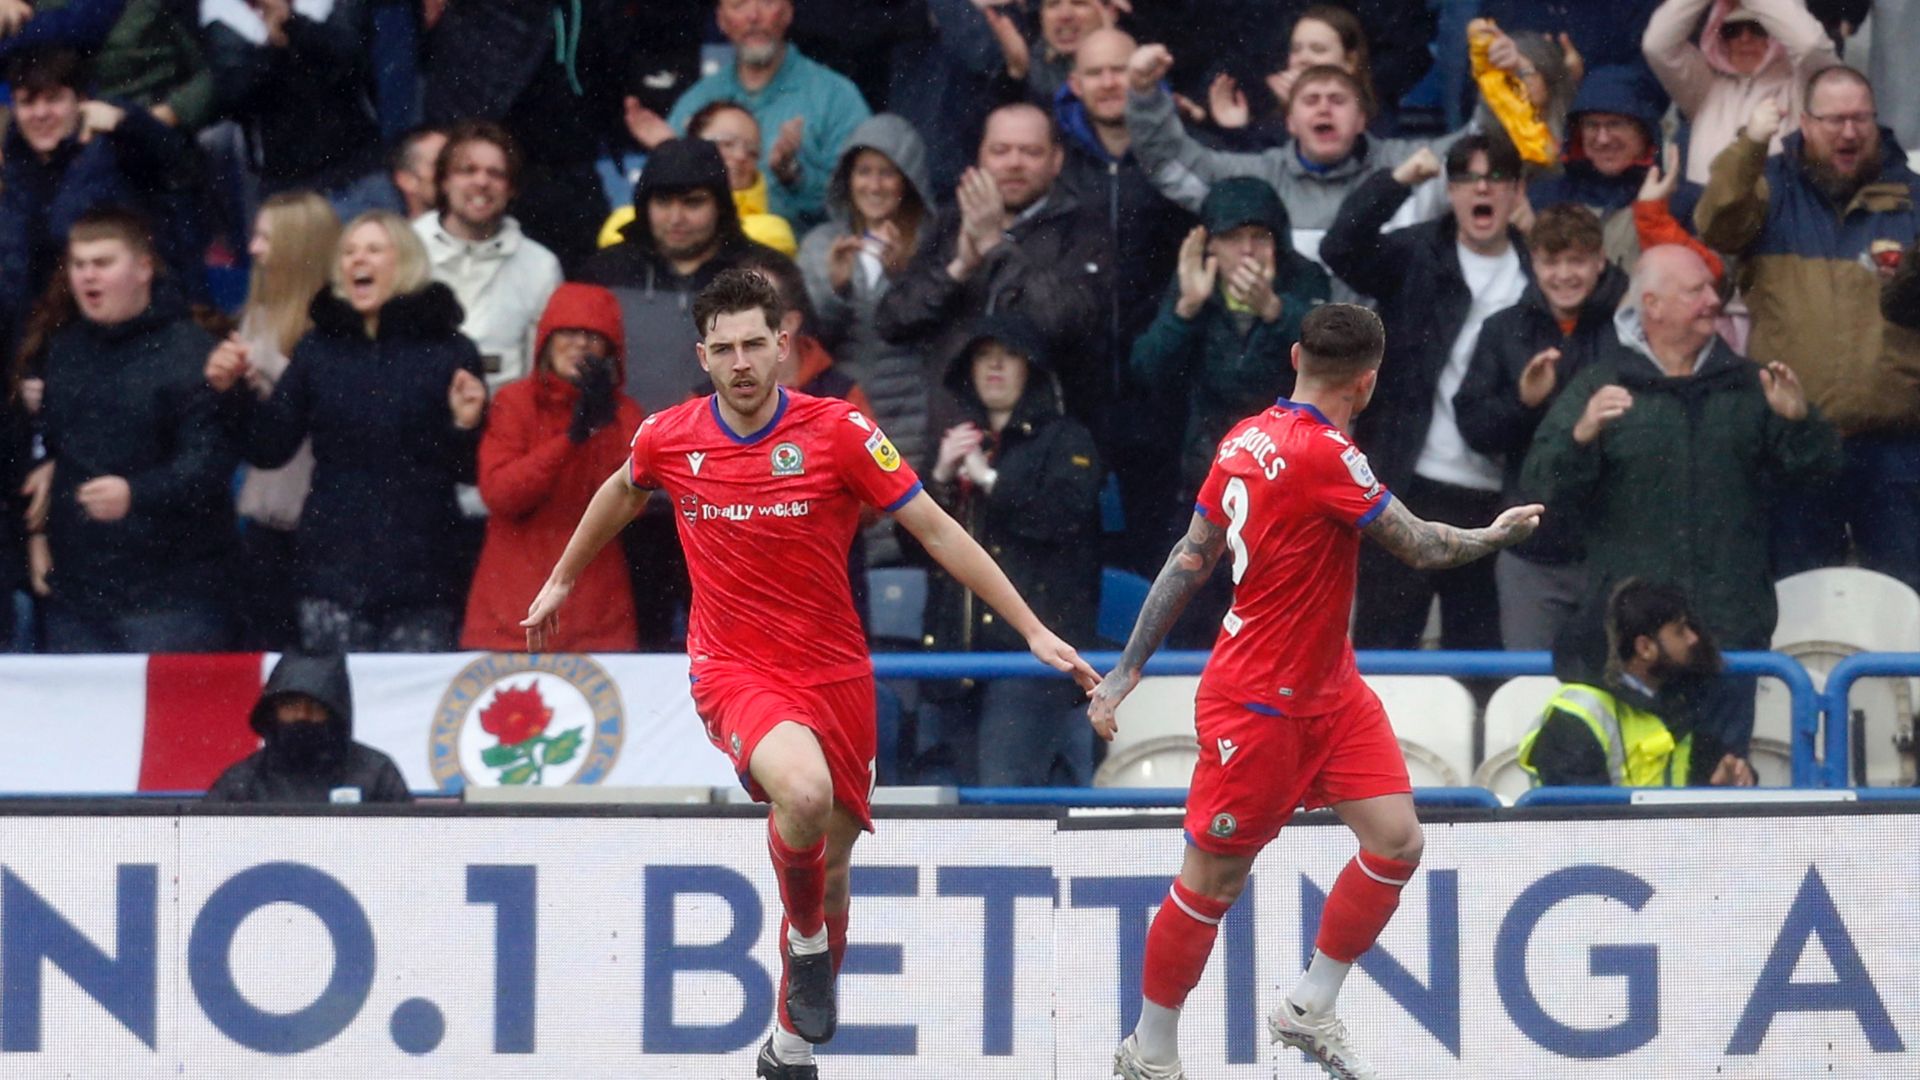 Millwall 1-2 Blackburn Rovers: Joe Rankin Costello and Callum Brittain earn  a comeback win, Football News